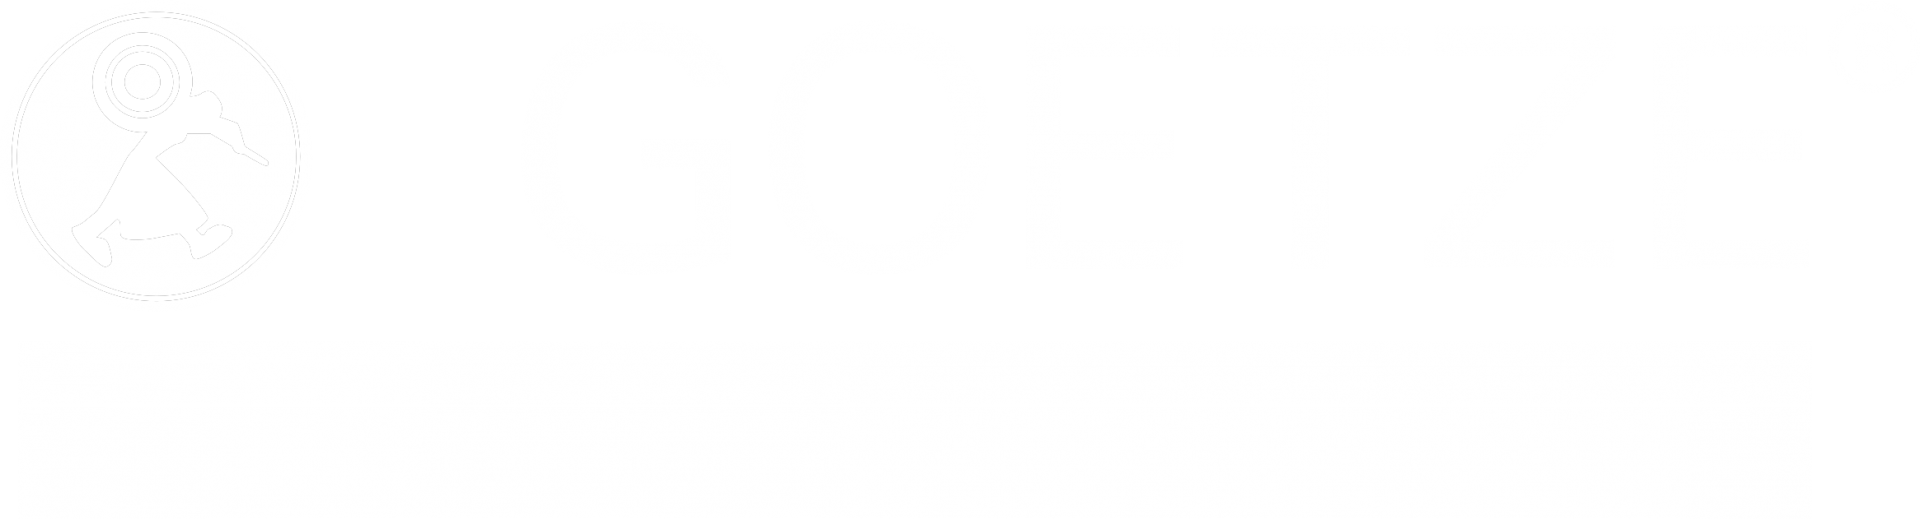 goetze-logo-transparent